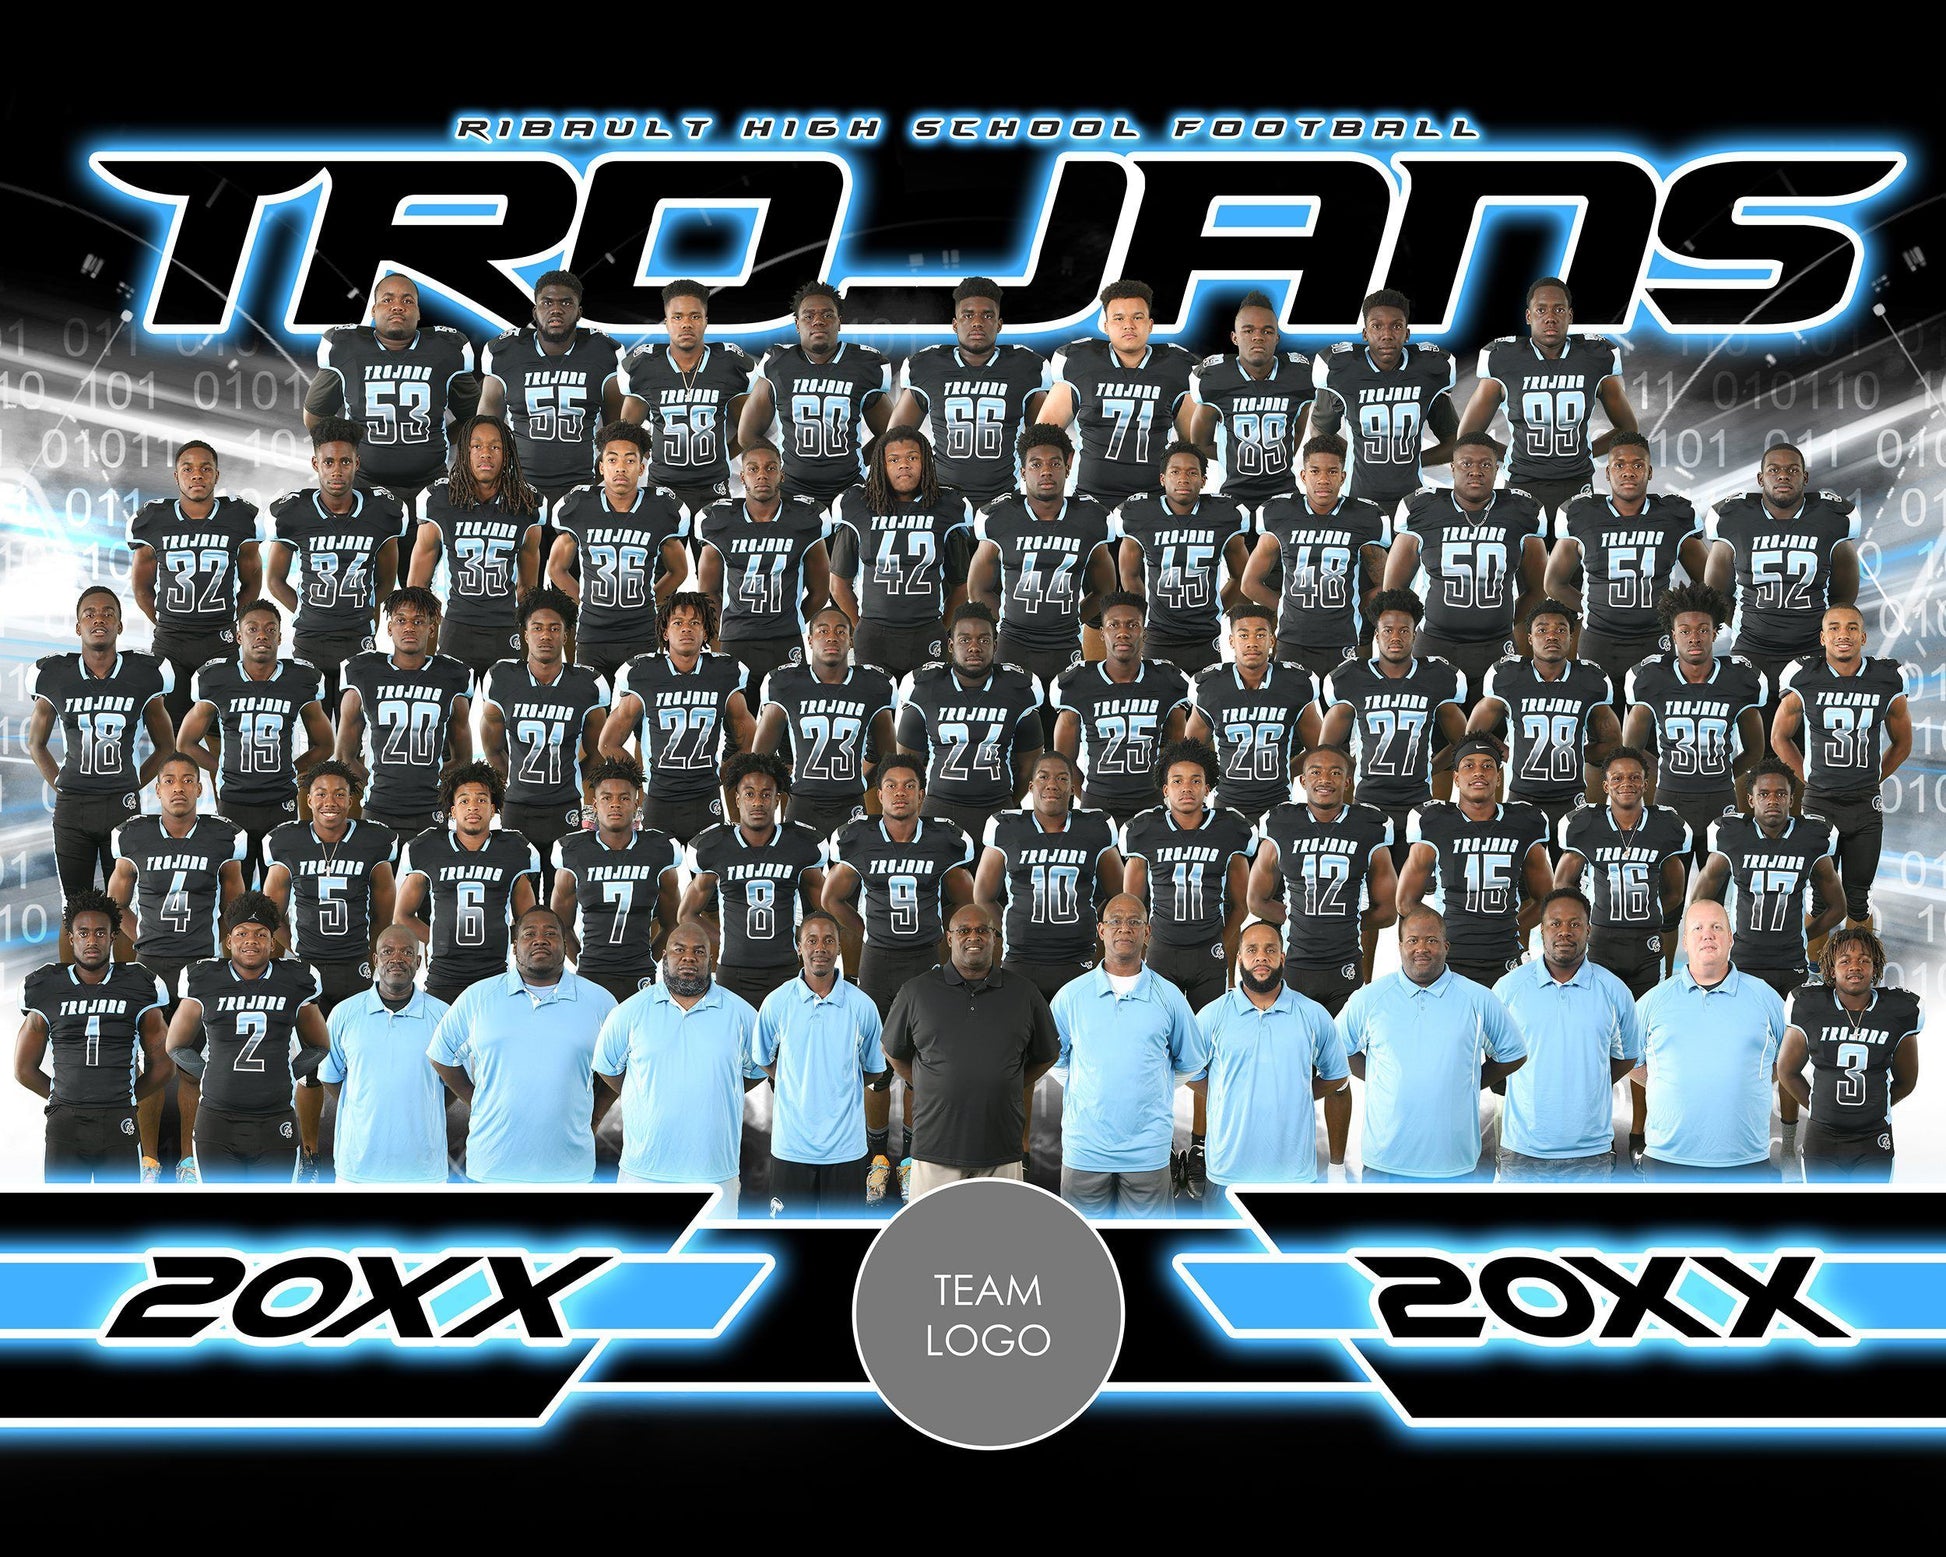 05 - Xtreme Team - V5.2 - Full Photoshop Template Collection-Photoshop Template - Photo Solutions